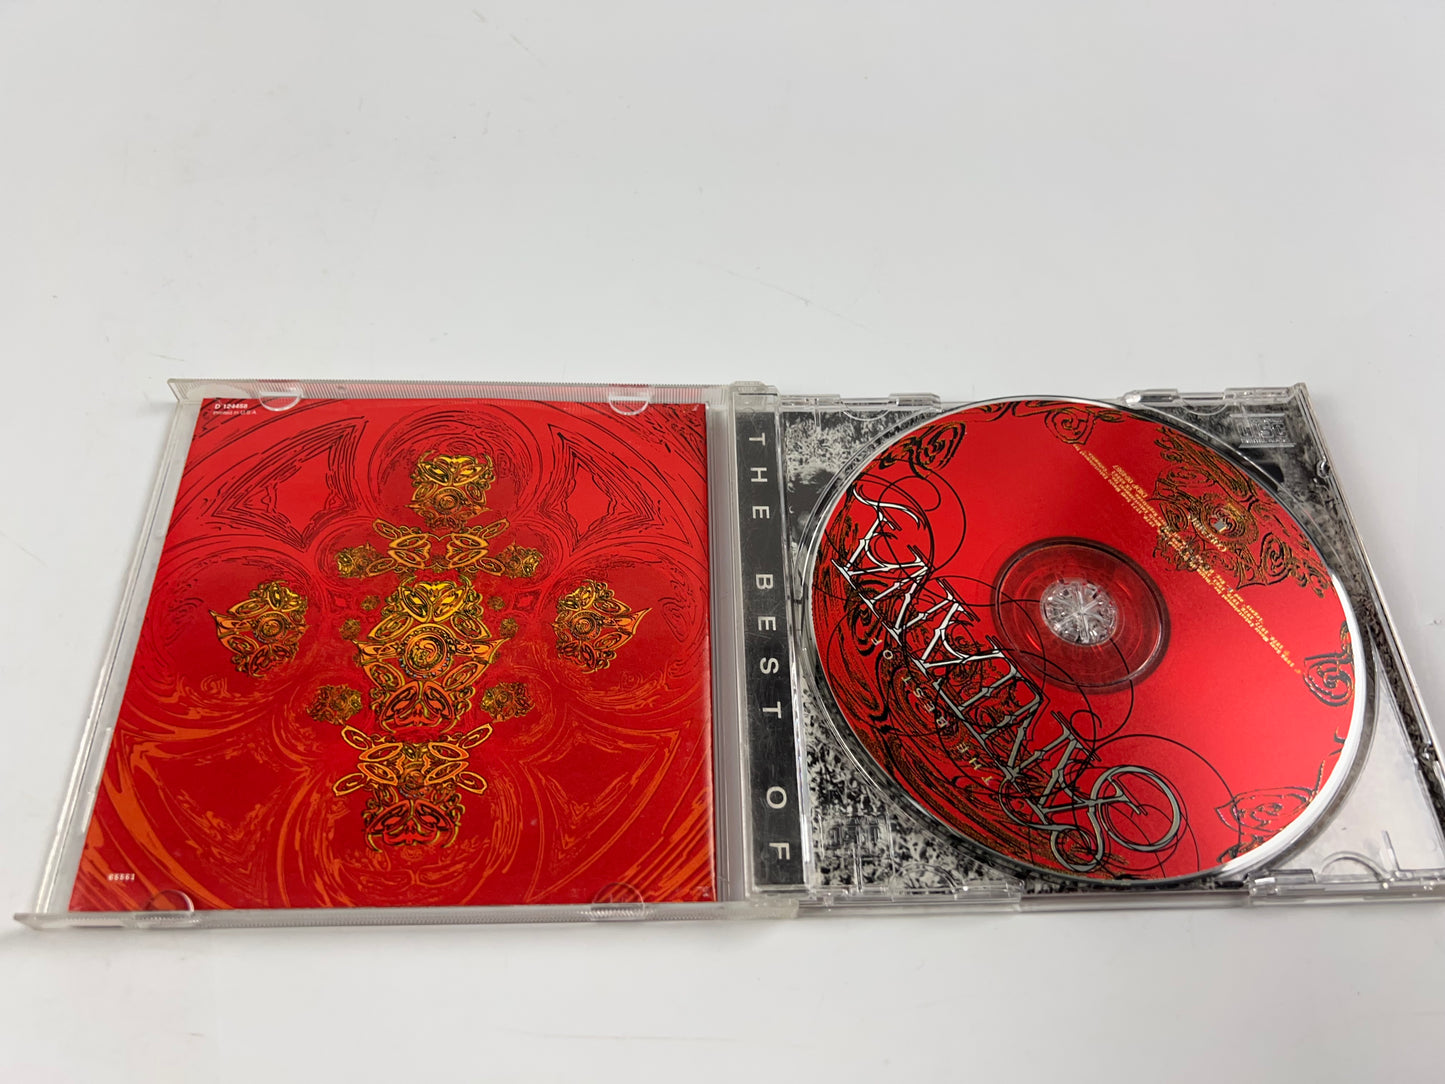 The Best of Santana - (Columbia, 1998, CK65561) - D124458 BMG Music CD